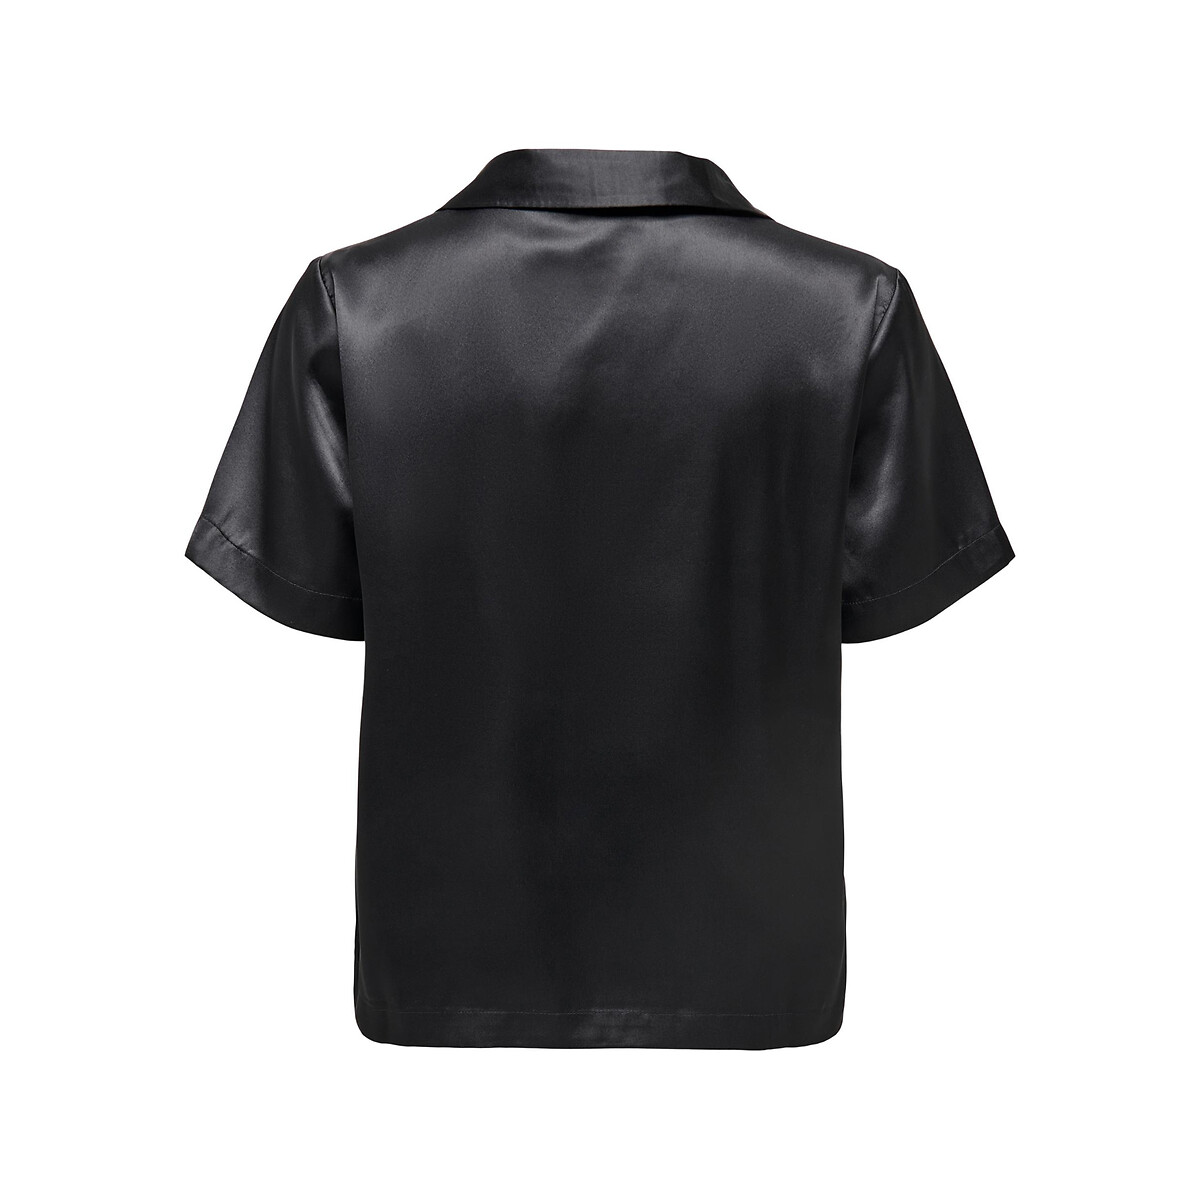 Блузка Из сатина короткие рукава L черный LaRedoute, размер L - фото 3